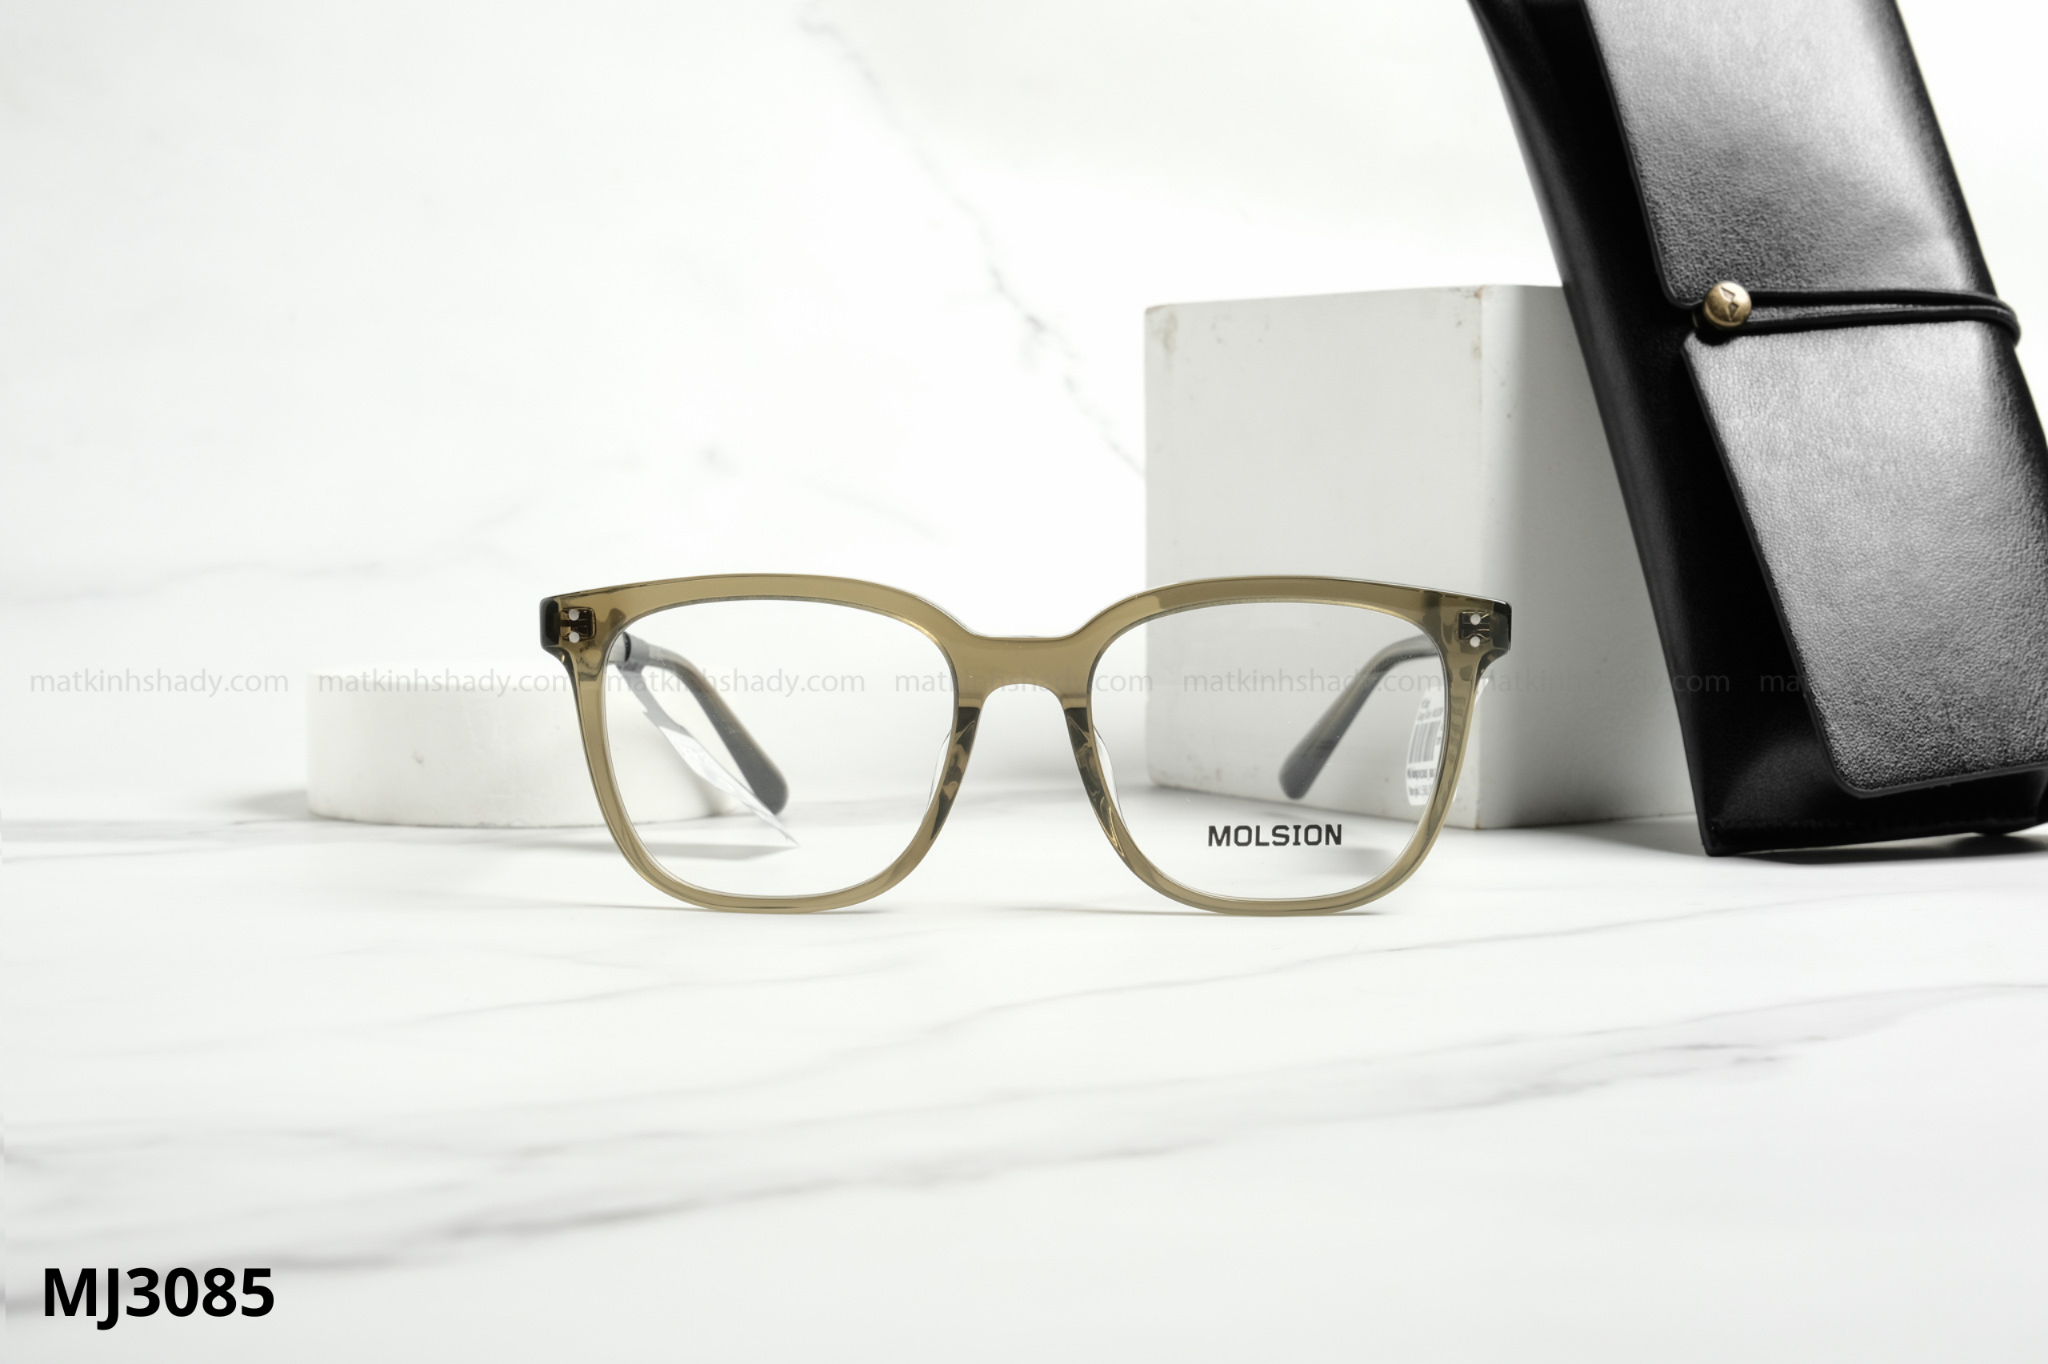  Molsion Eyewear - Glasses - MJ3085 